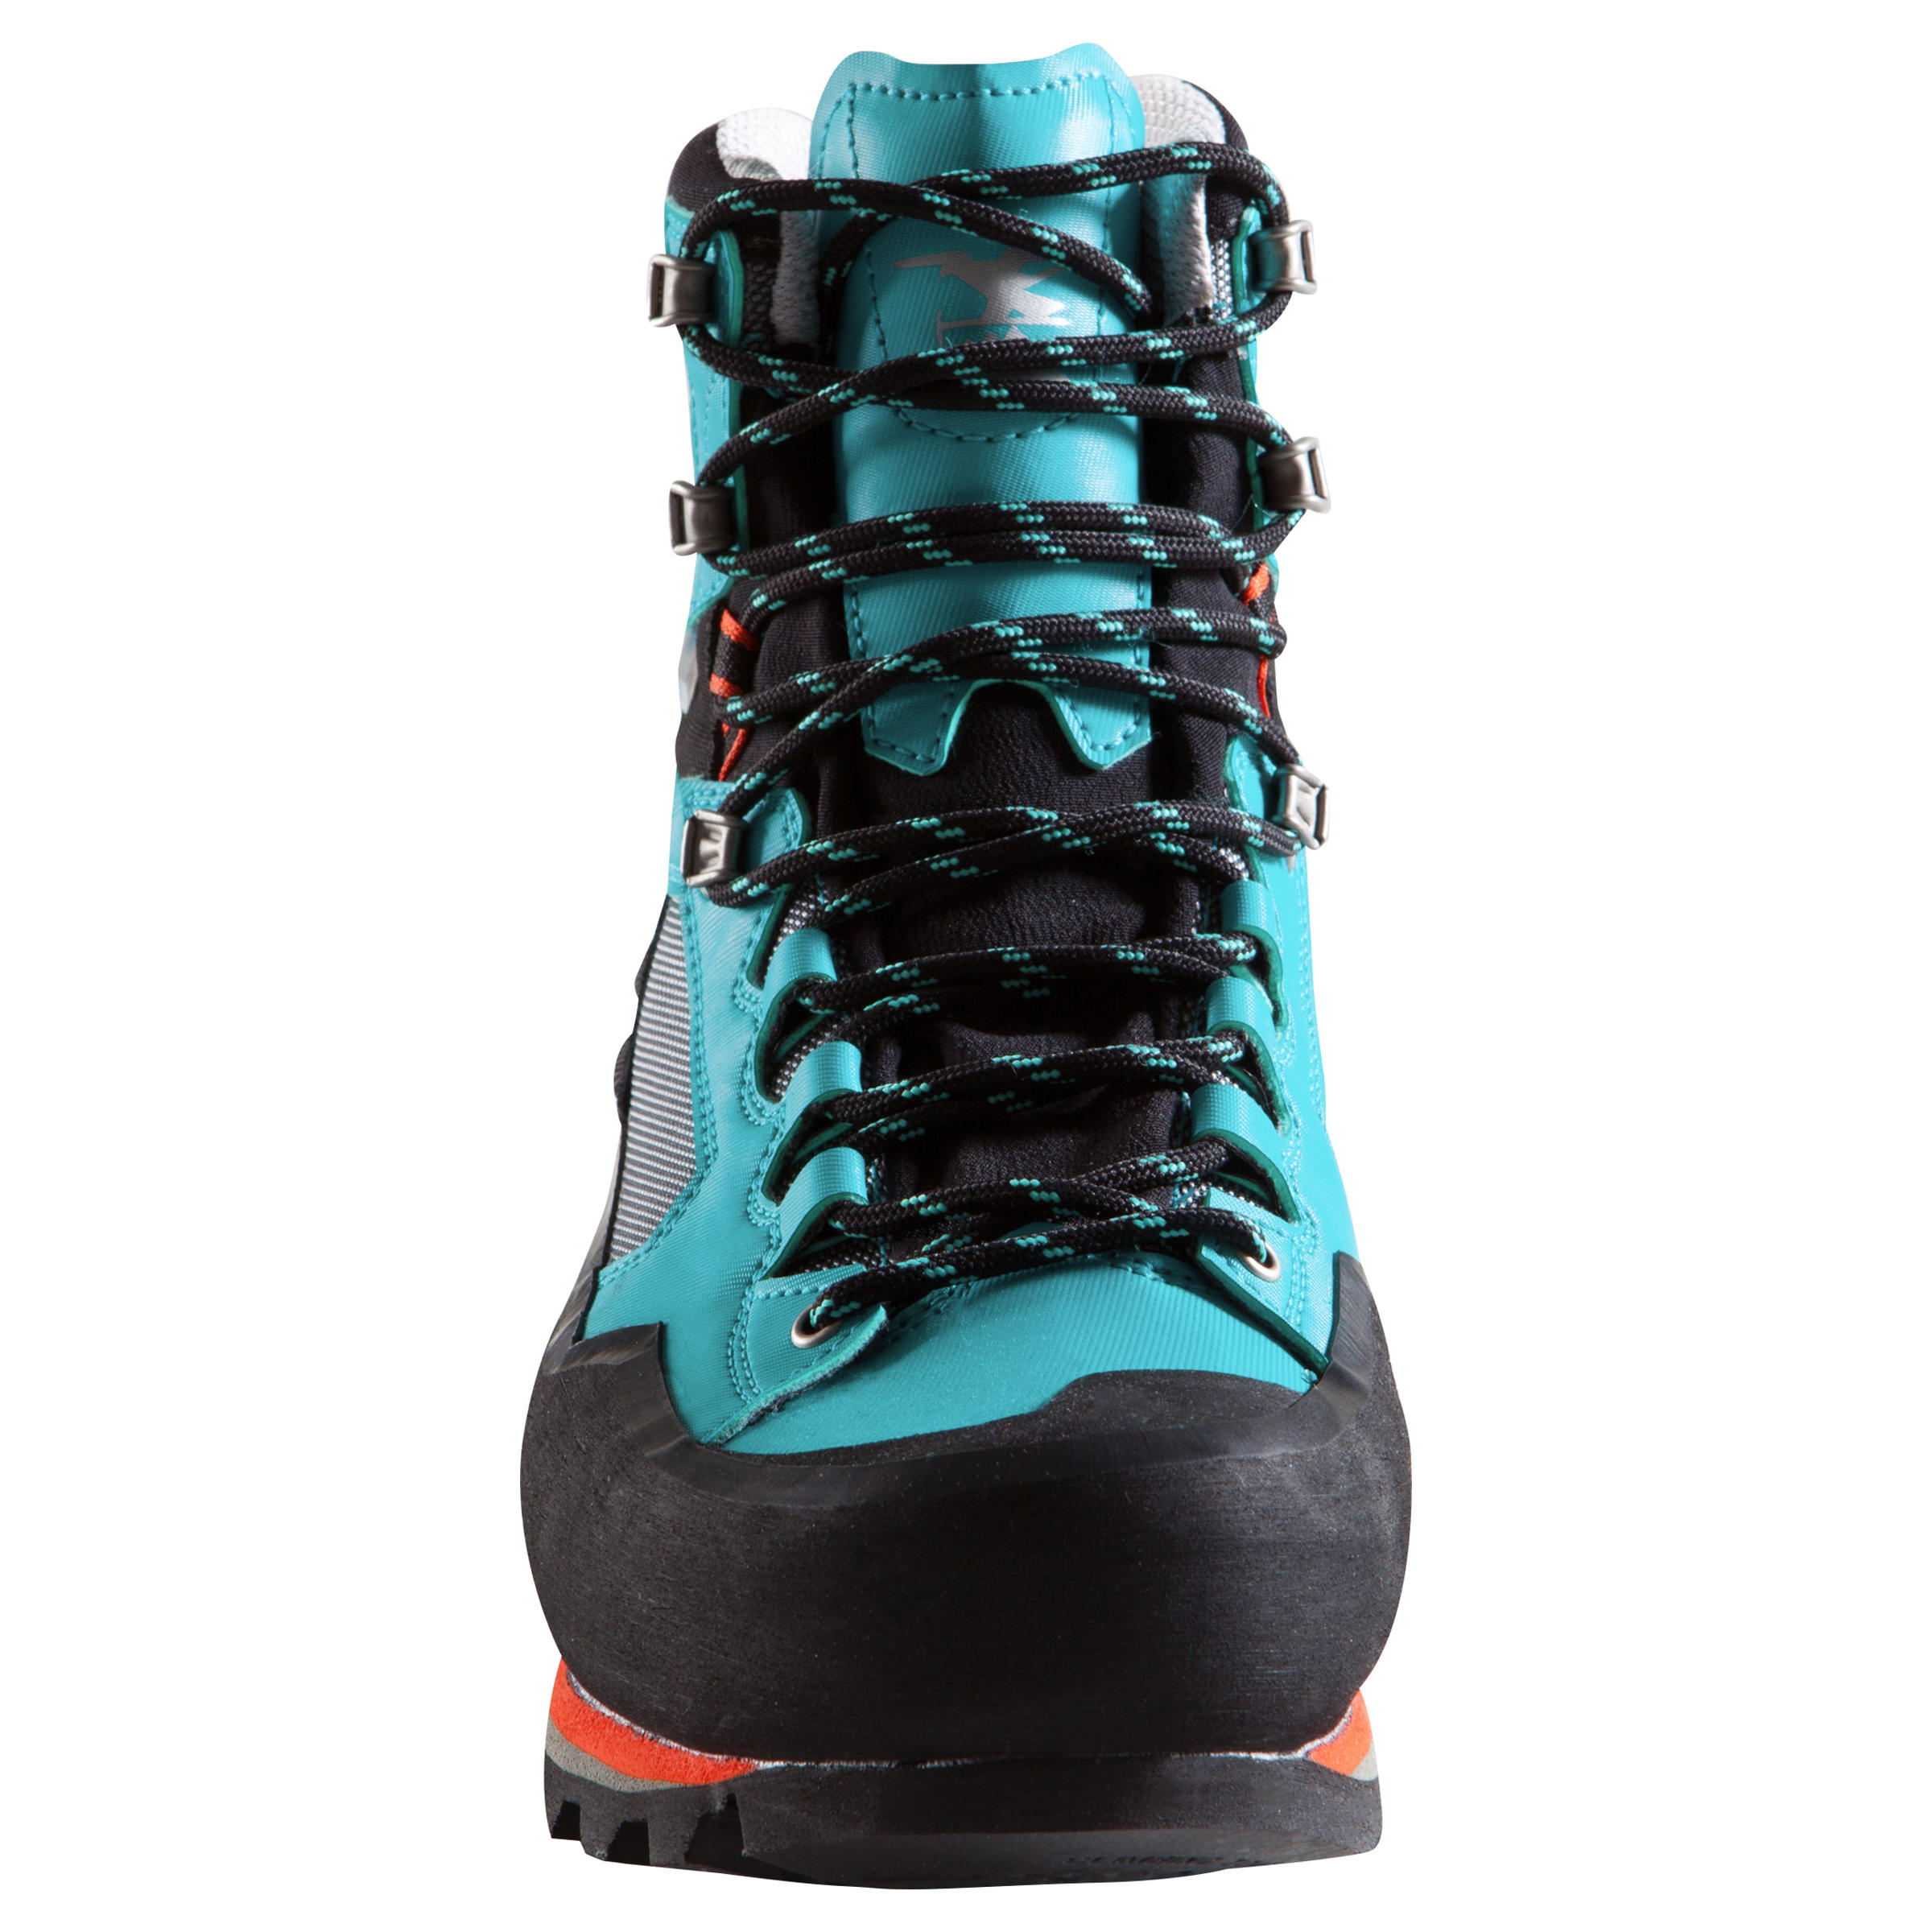 Women's 3 seasons mountaineering boots - ALPINISM LIGHT turquoise 3/16